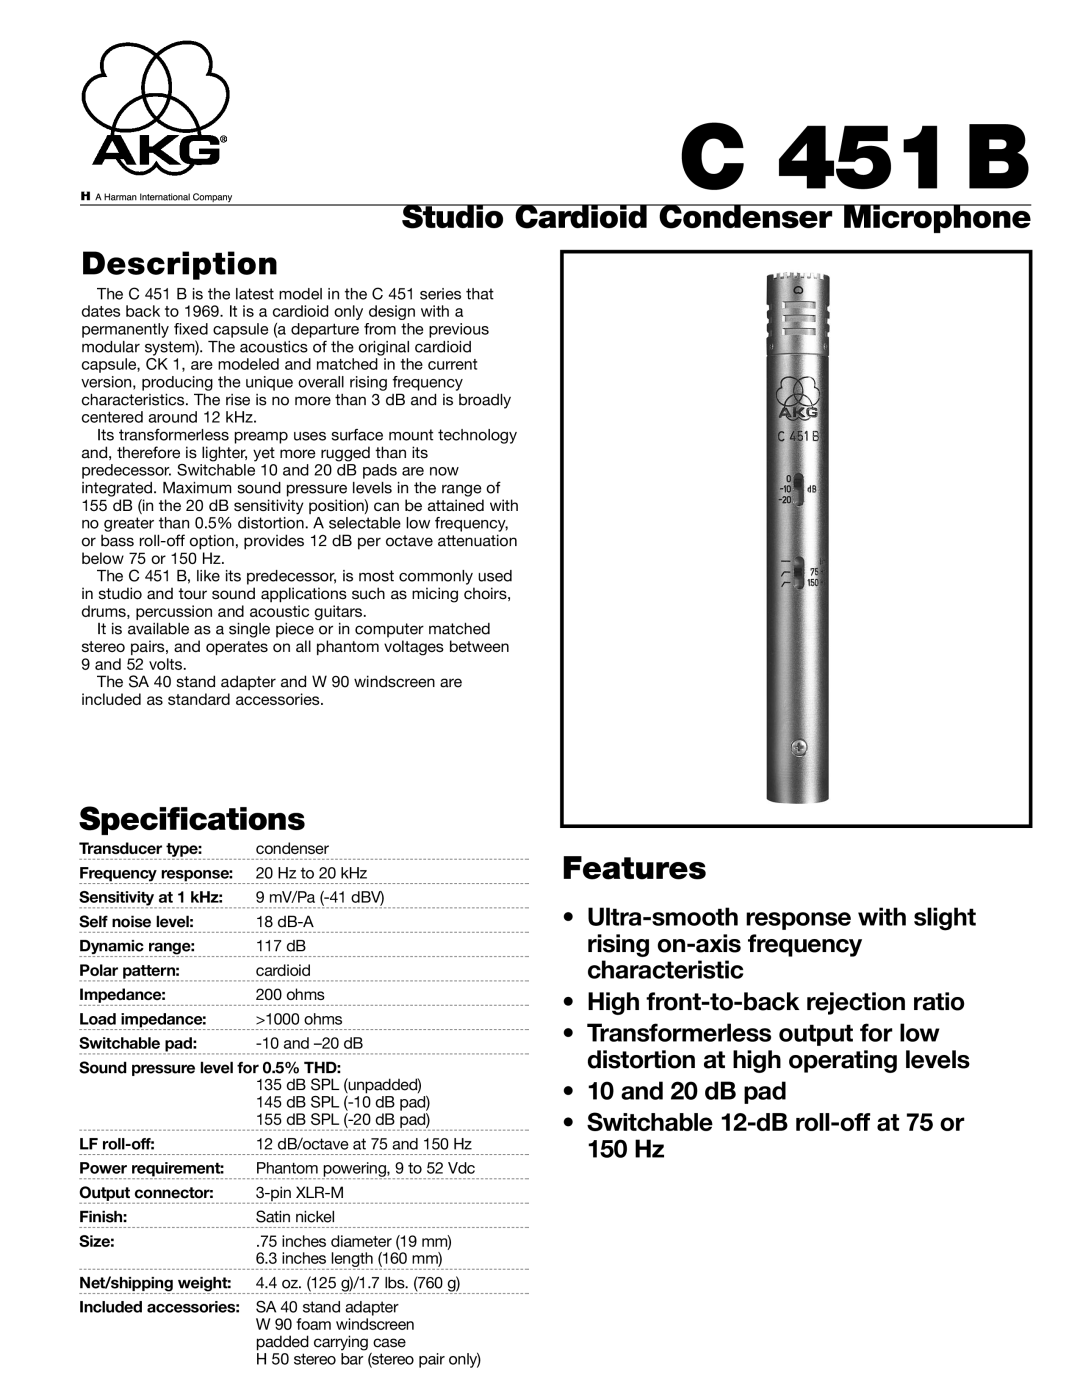 AKG Acoustics C 451B specifications Studio Cardioid Condenser Microphone Description, Specifications, Features 